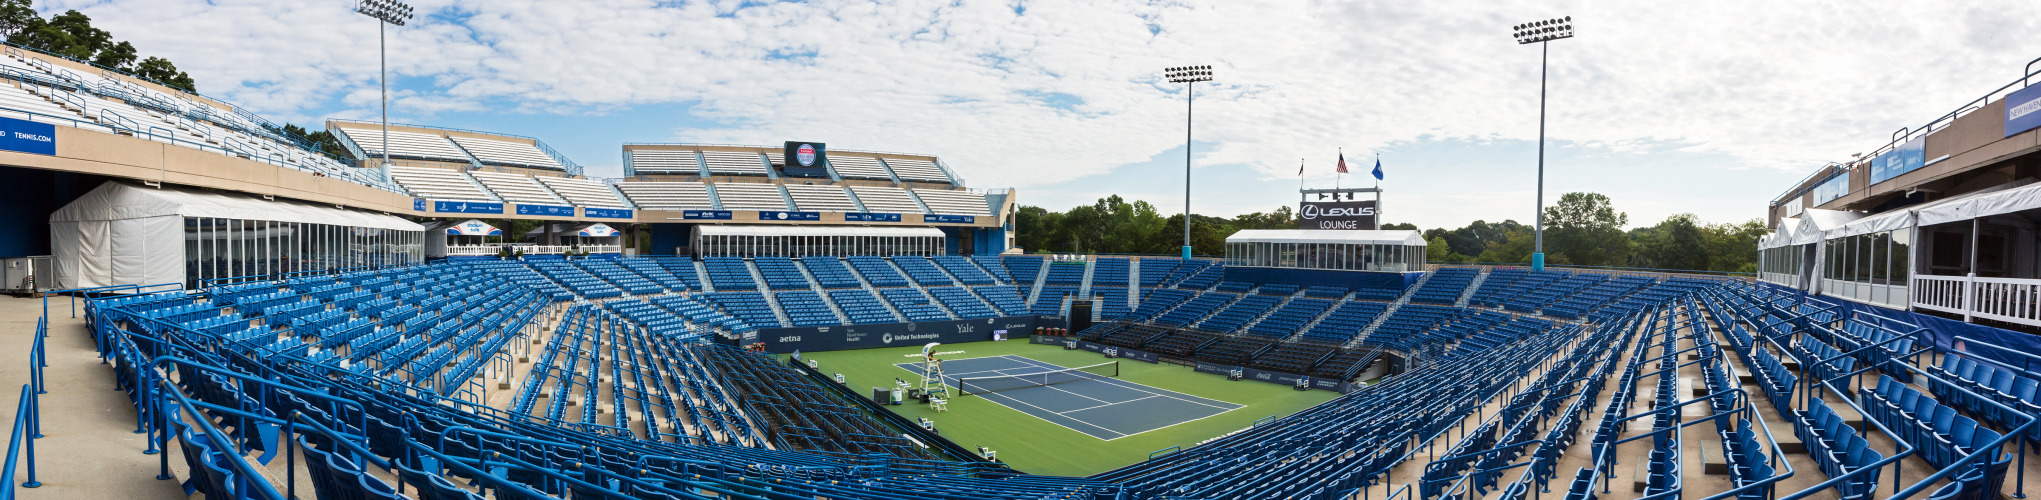 The Connecticut Open Tennis Tournament
New Haven, CT